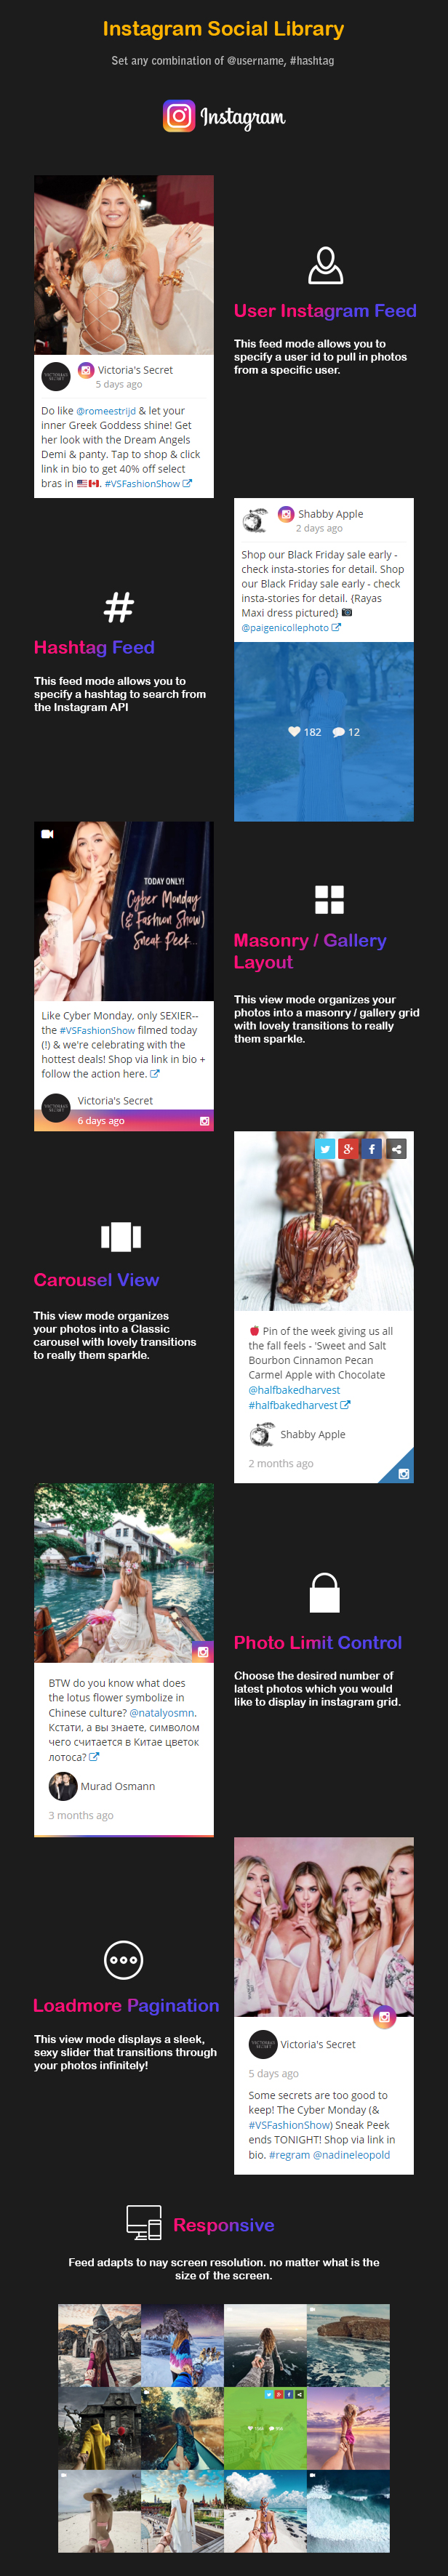 Elementor - Grille de flux social Instagram avec carrousel